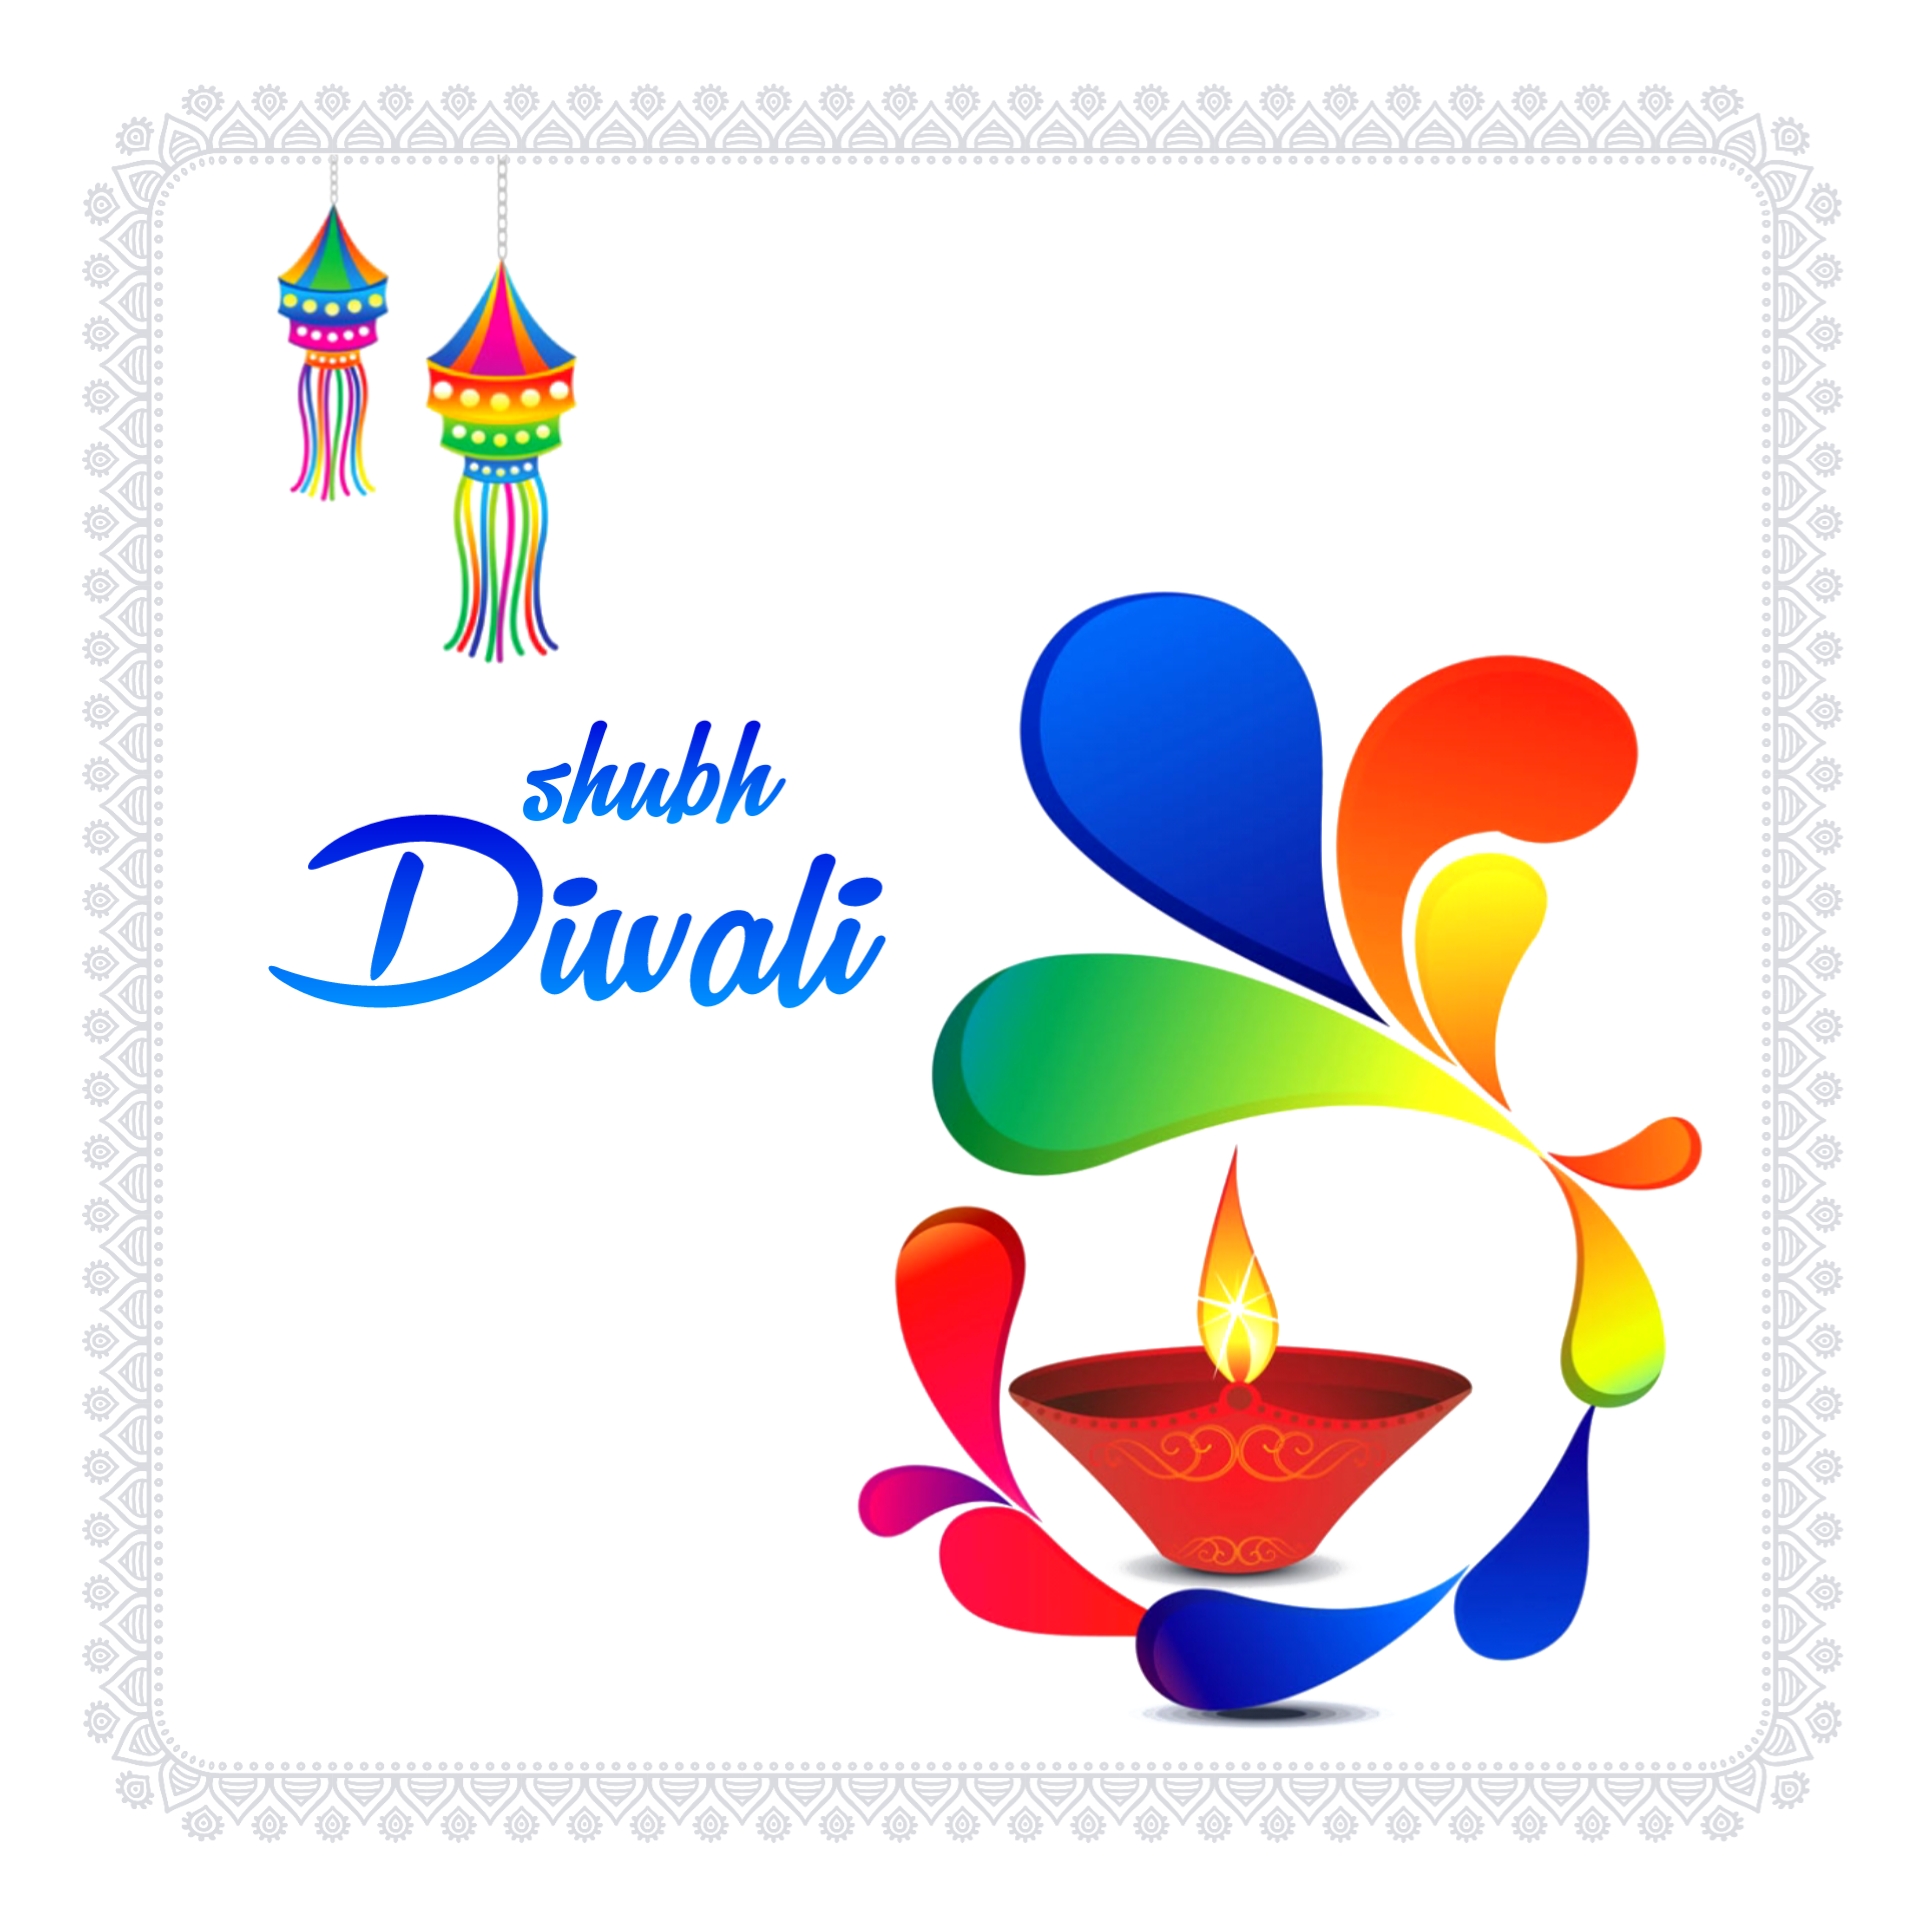 Diwali Greeting images